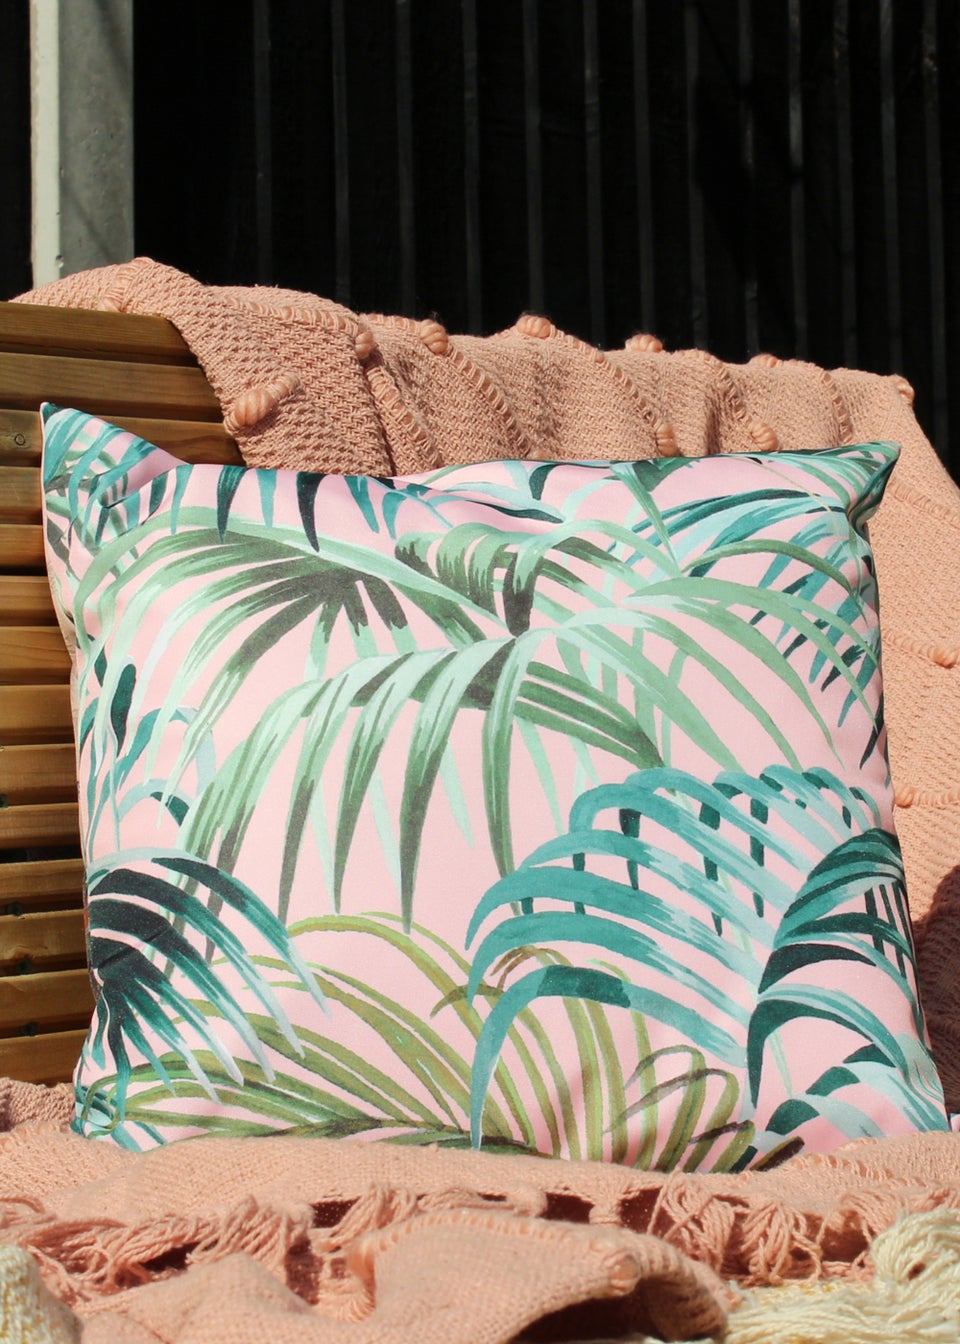 furn. Jungle Outdoor Filled Cushion (43cm x 43cm x 8cm)